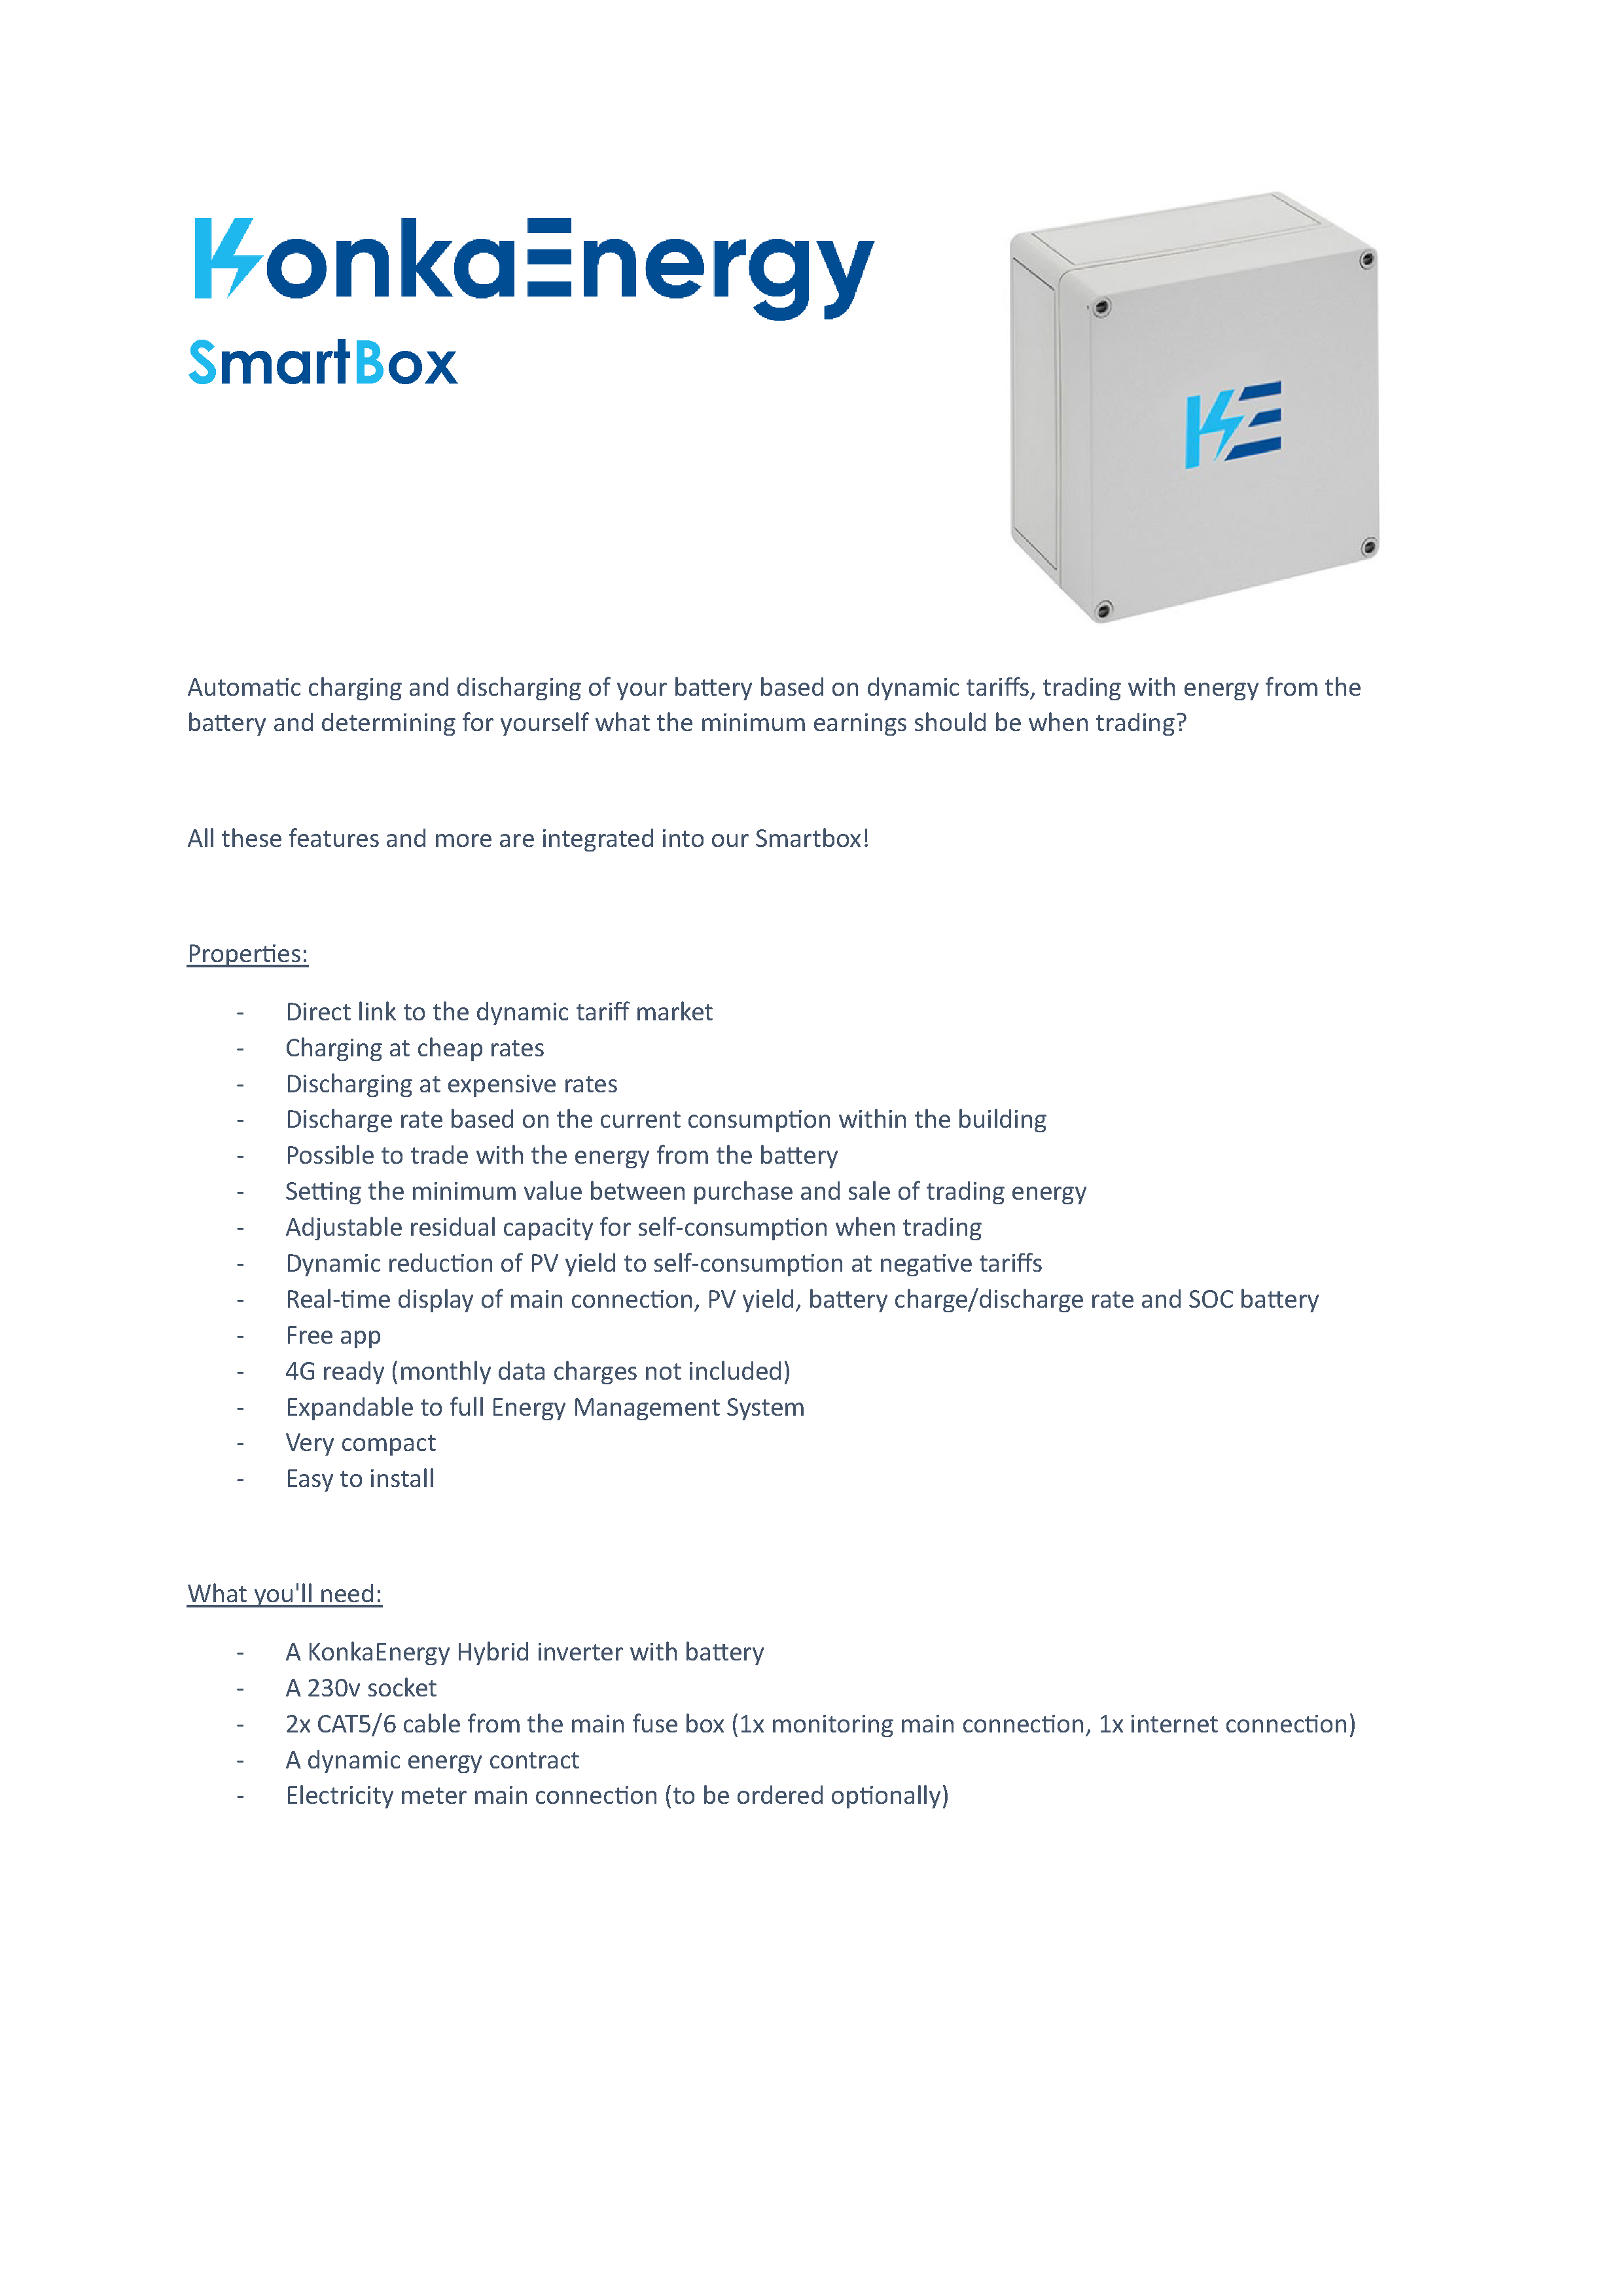 ke-smartbox-datasheet